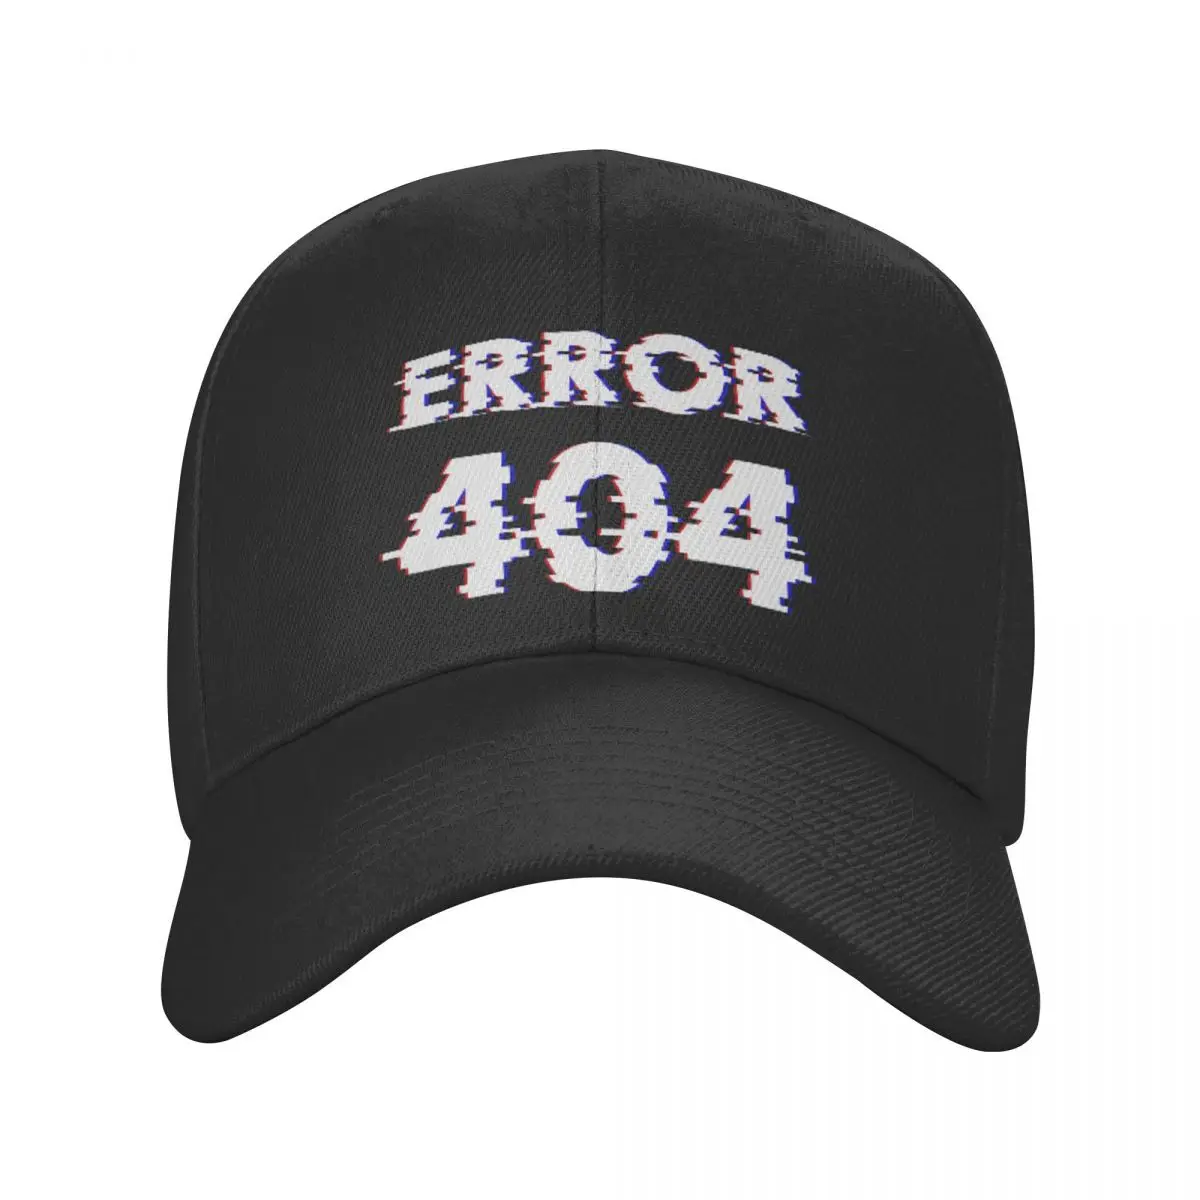 

New Error 404 Motivation Not Found Baseball Cap for Men Women Breathable Computer Geek Programmer Dad Hat Outdoor Snapback Caps